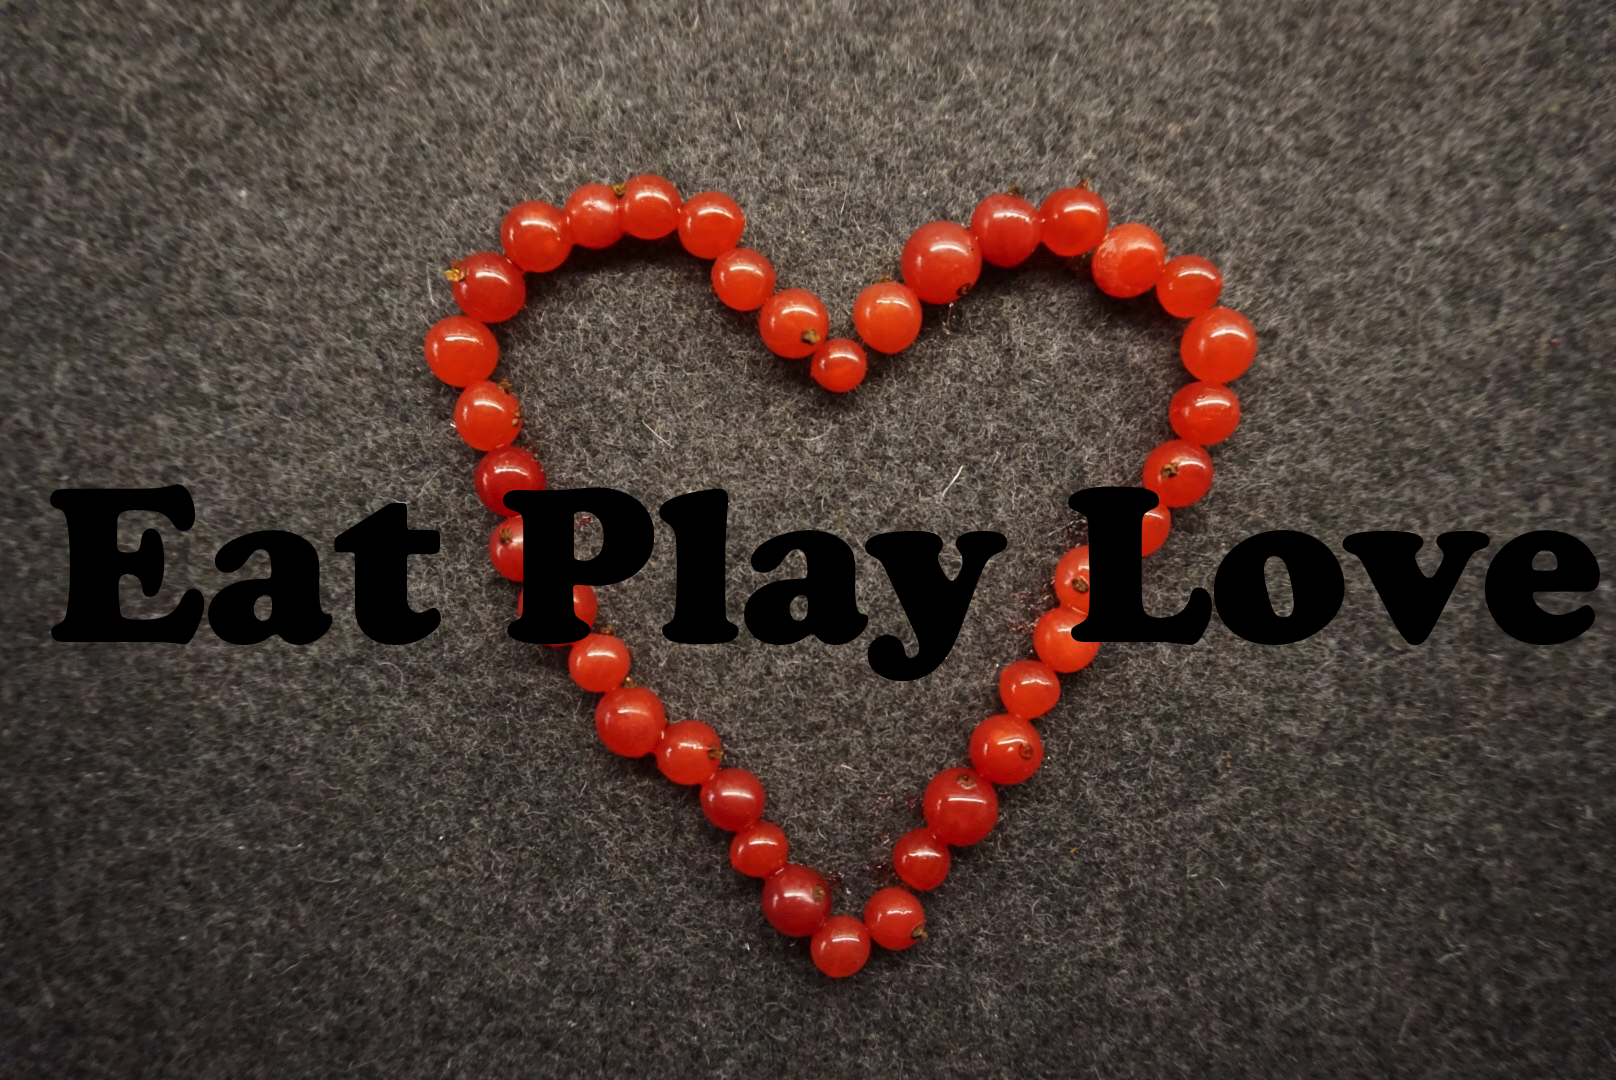 Eat, Play, Love